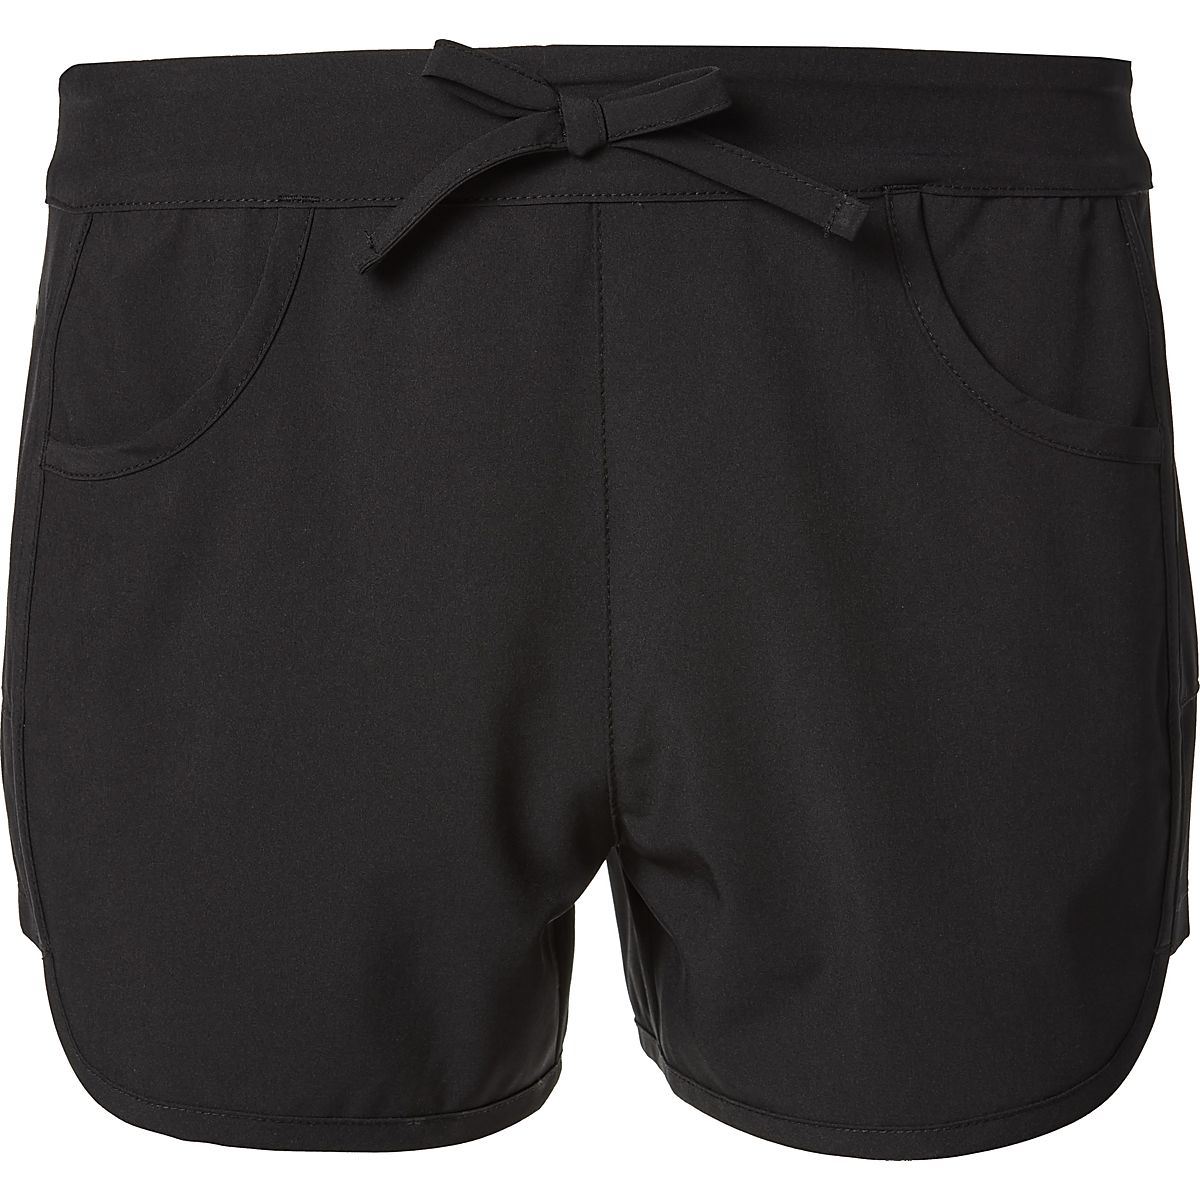 Zodggu Deals Men's Overalls Shorts Beachwear Summer Thin Multi